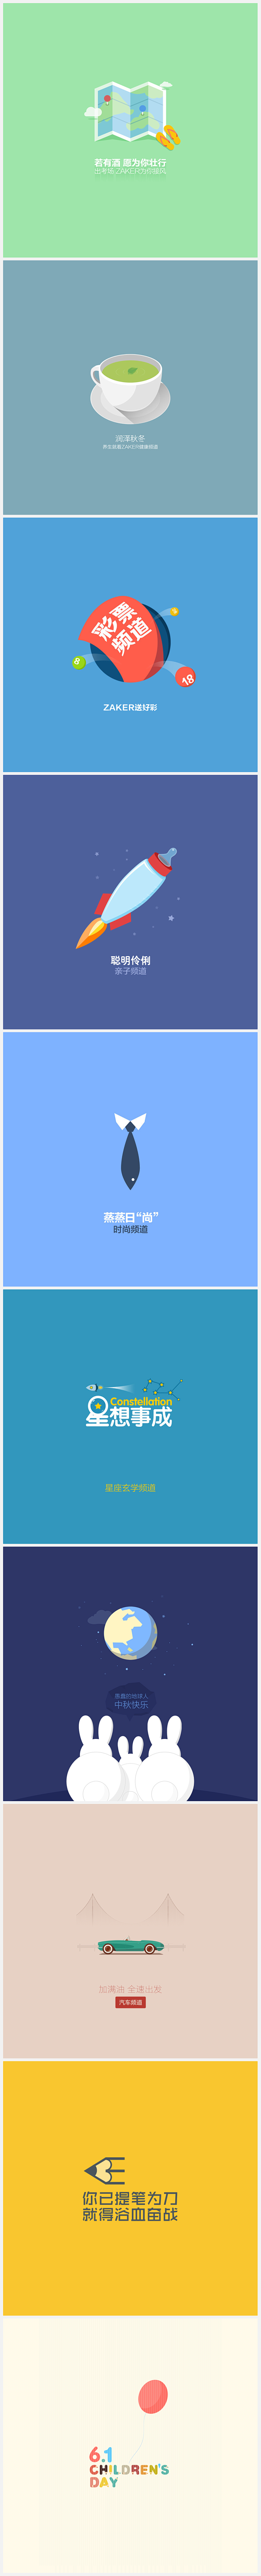 ZAKER 设计团队封面设计-UI中国-...